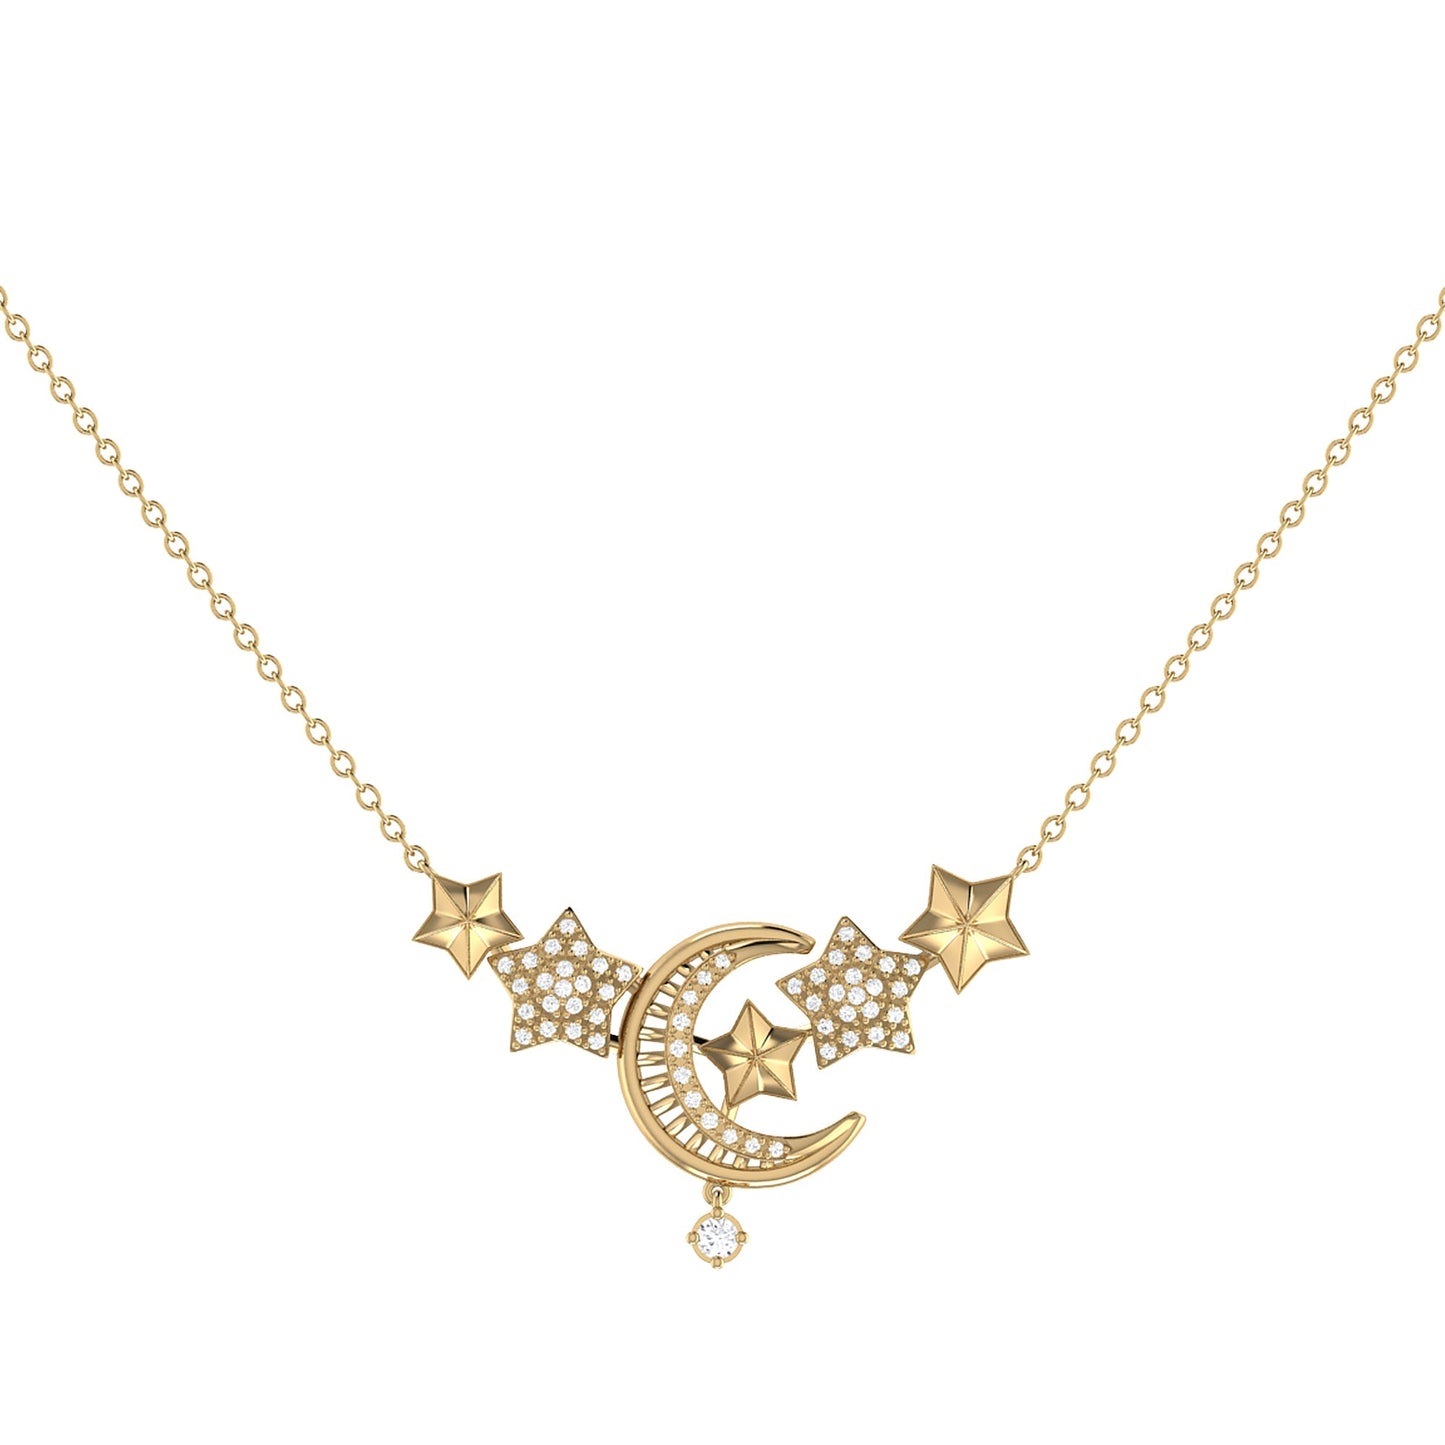 Star Cluster Moon Crescent Diamond Necklace in 14K Yellow Gold Vermeil - Adrasse Cosmetics